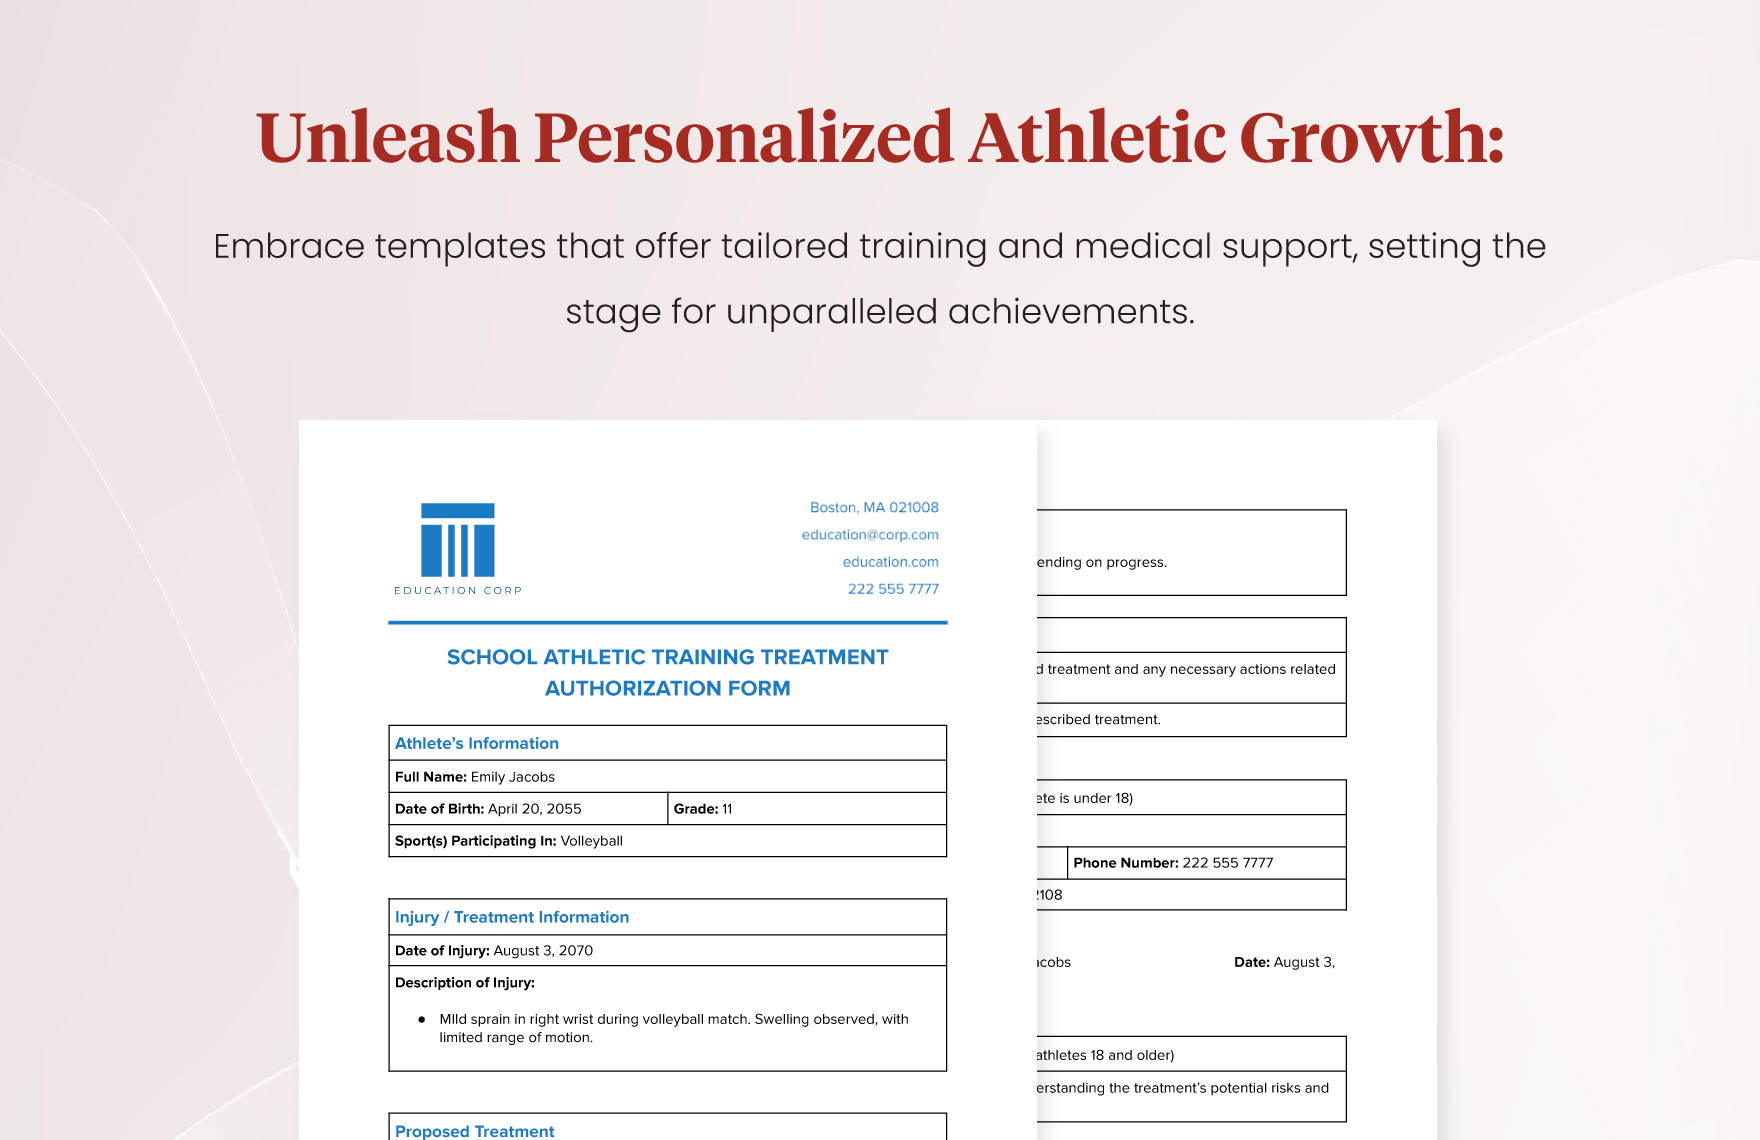 School Athletic Training Treatment Authorization Form Template